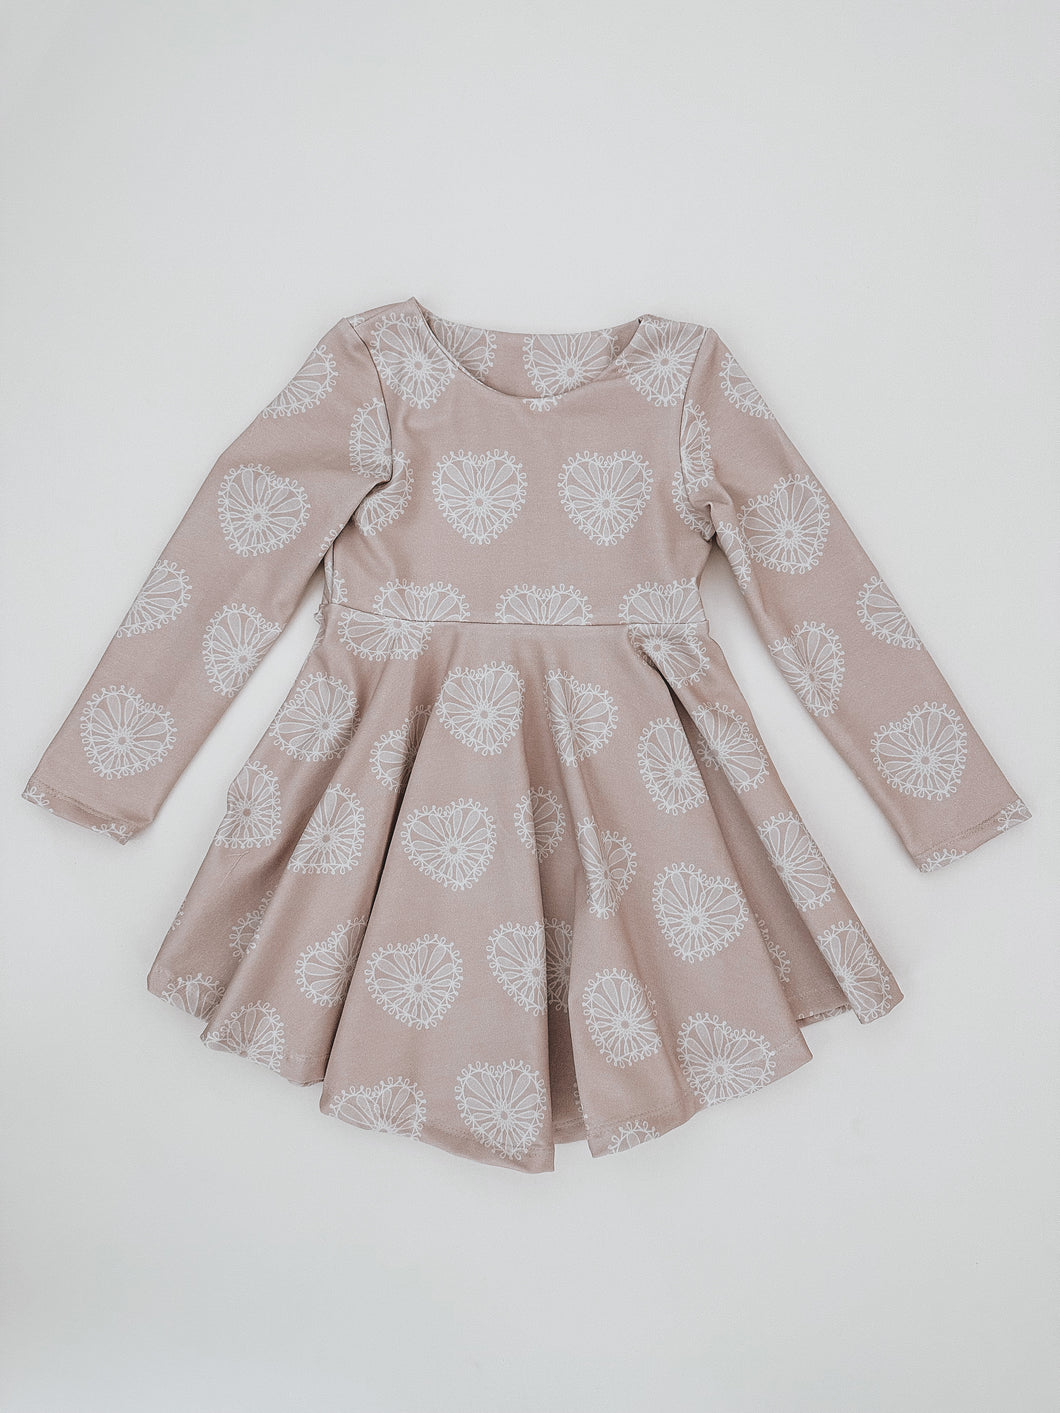 Sloane Long Sleeve Twirl Dress: Lace Hearts